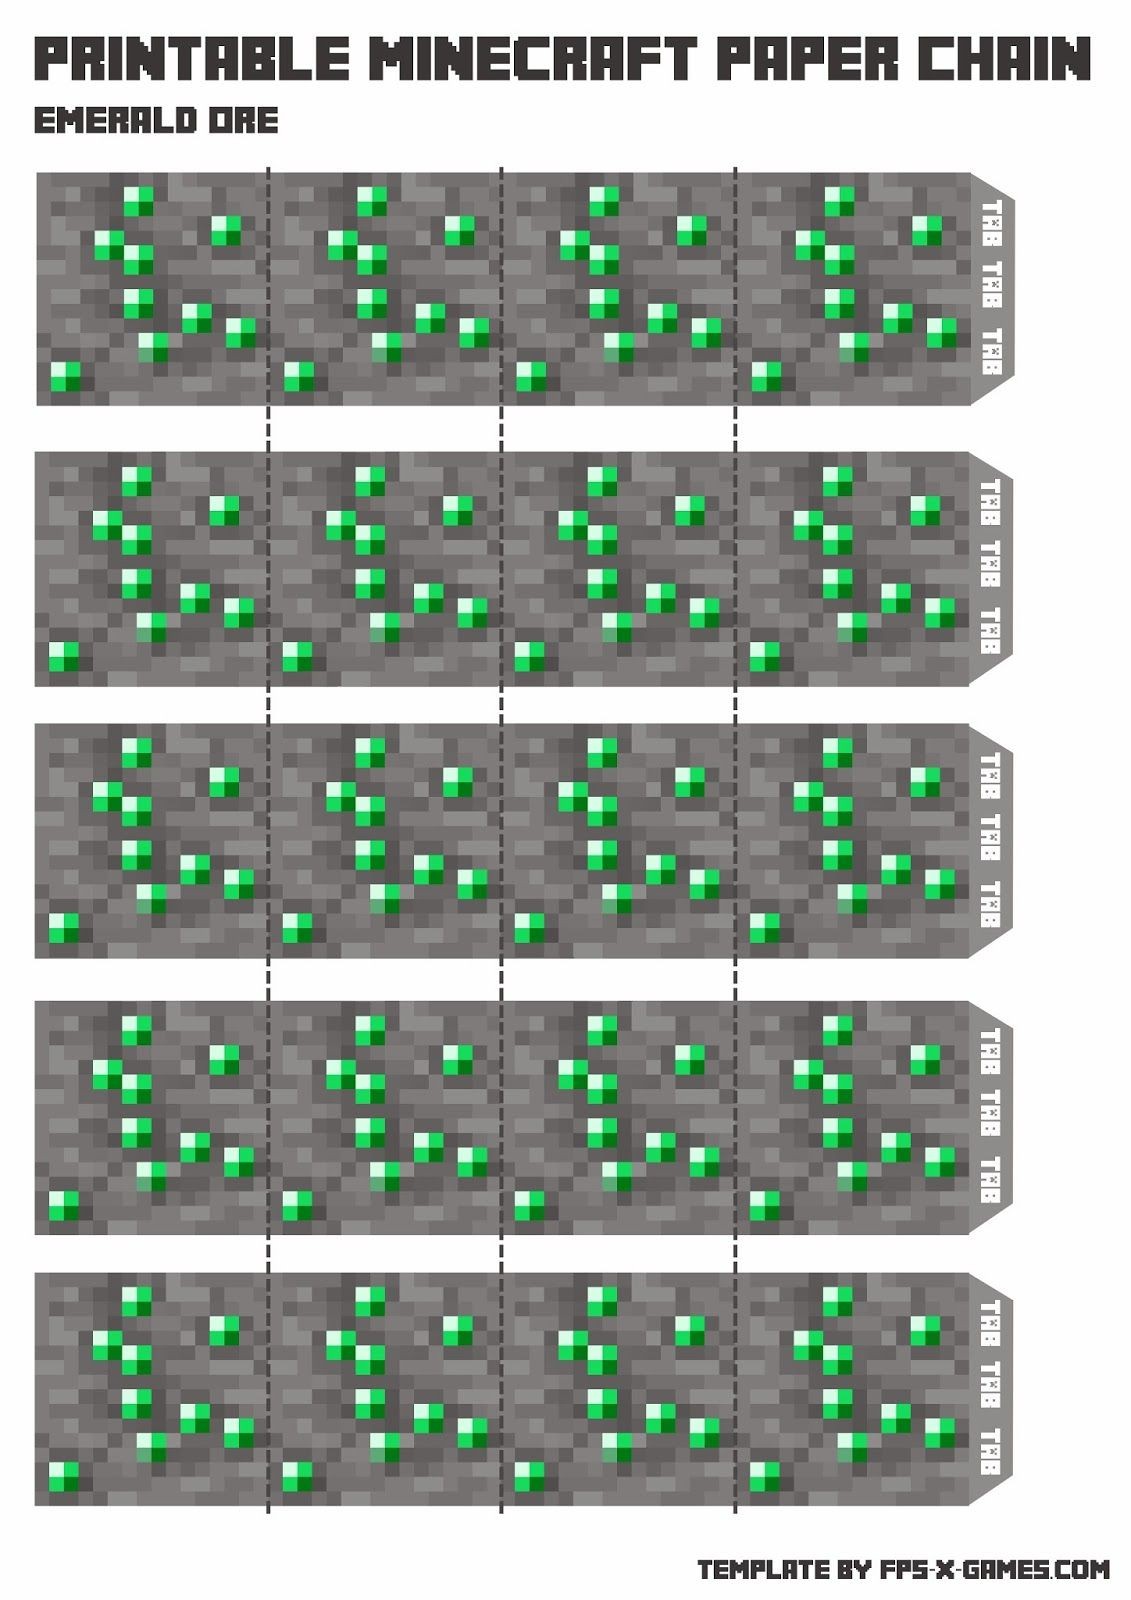 Minecraft Papercraft Diamond Minecraft Papercraft Chain Emerald ore